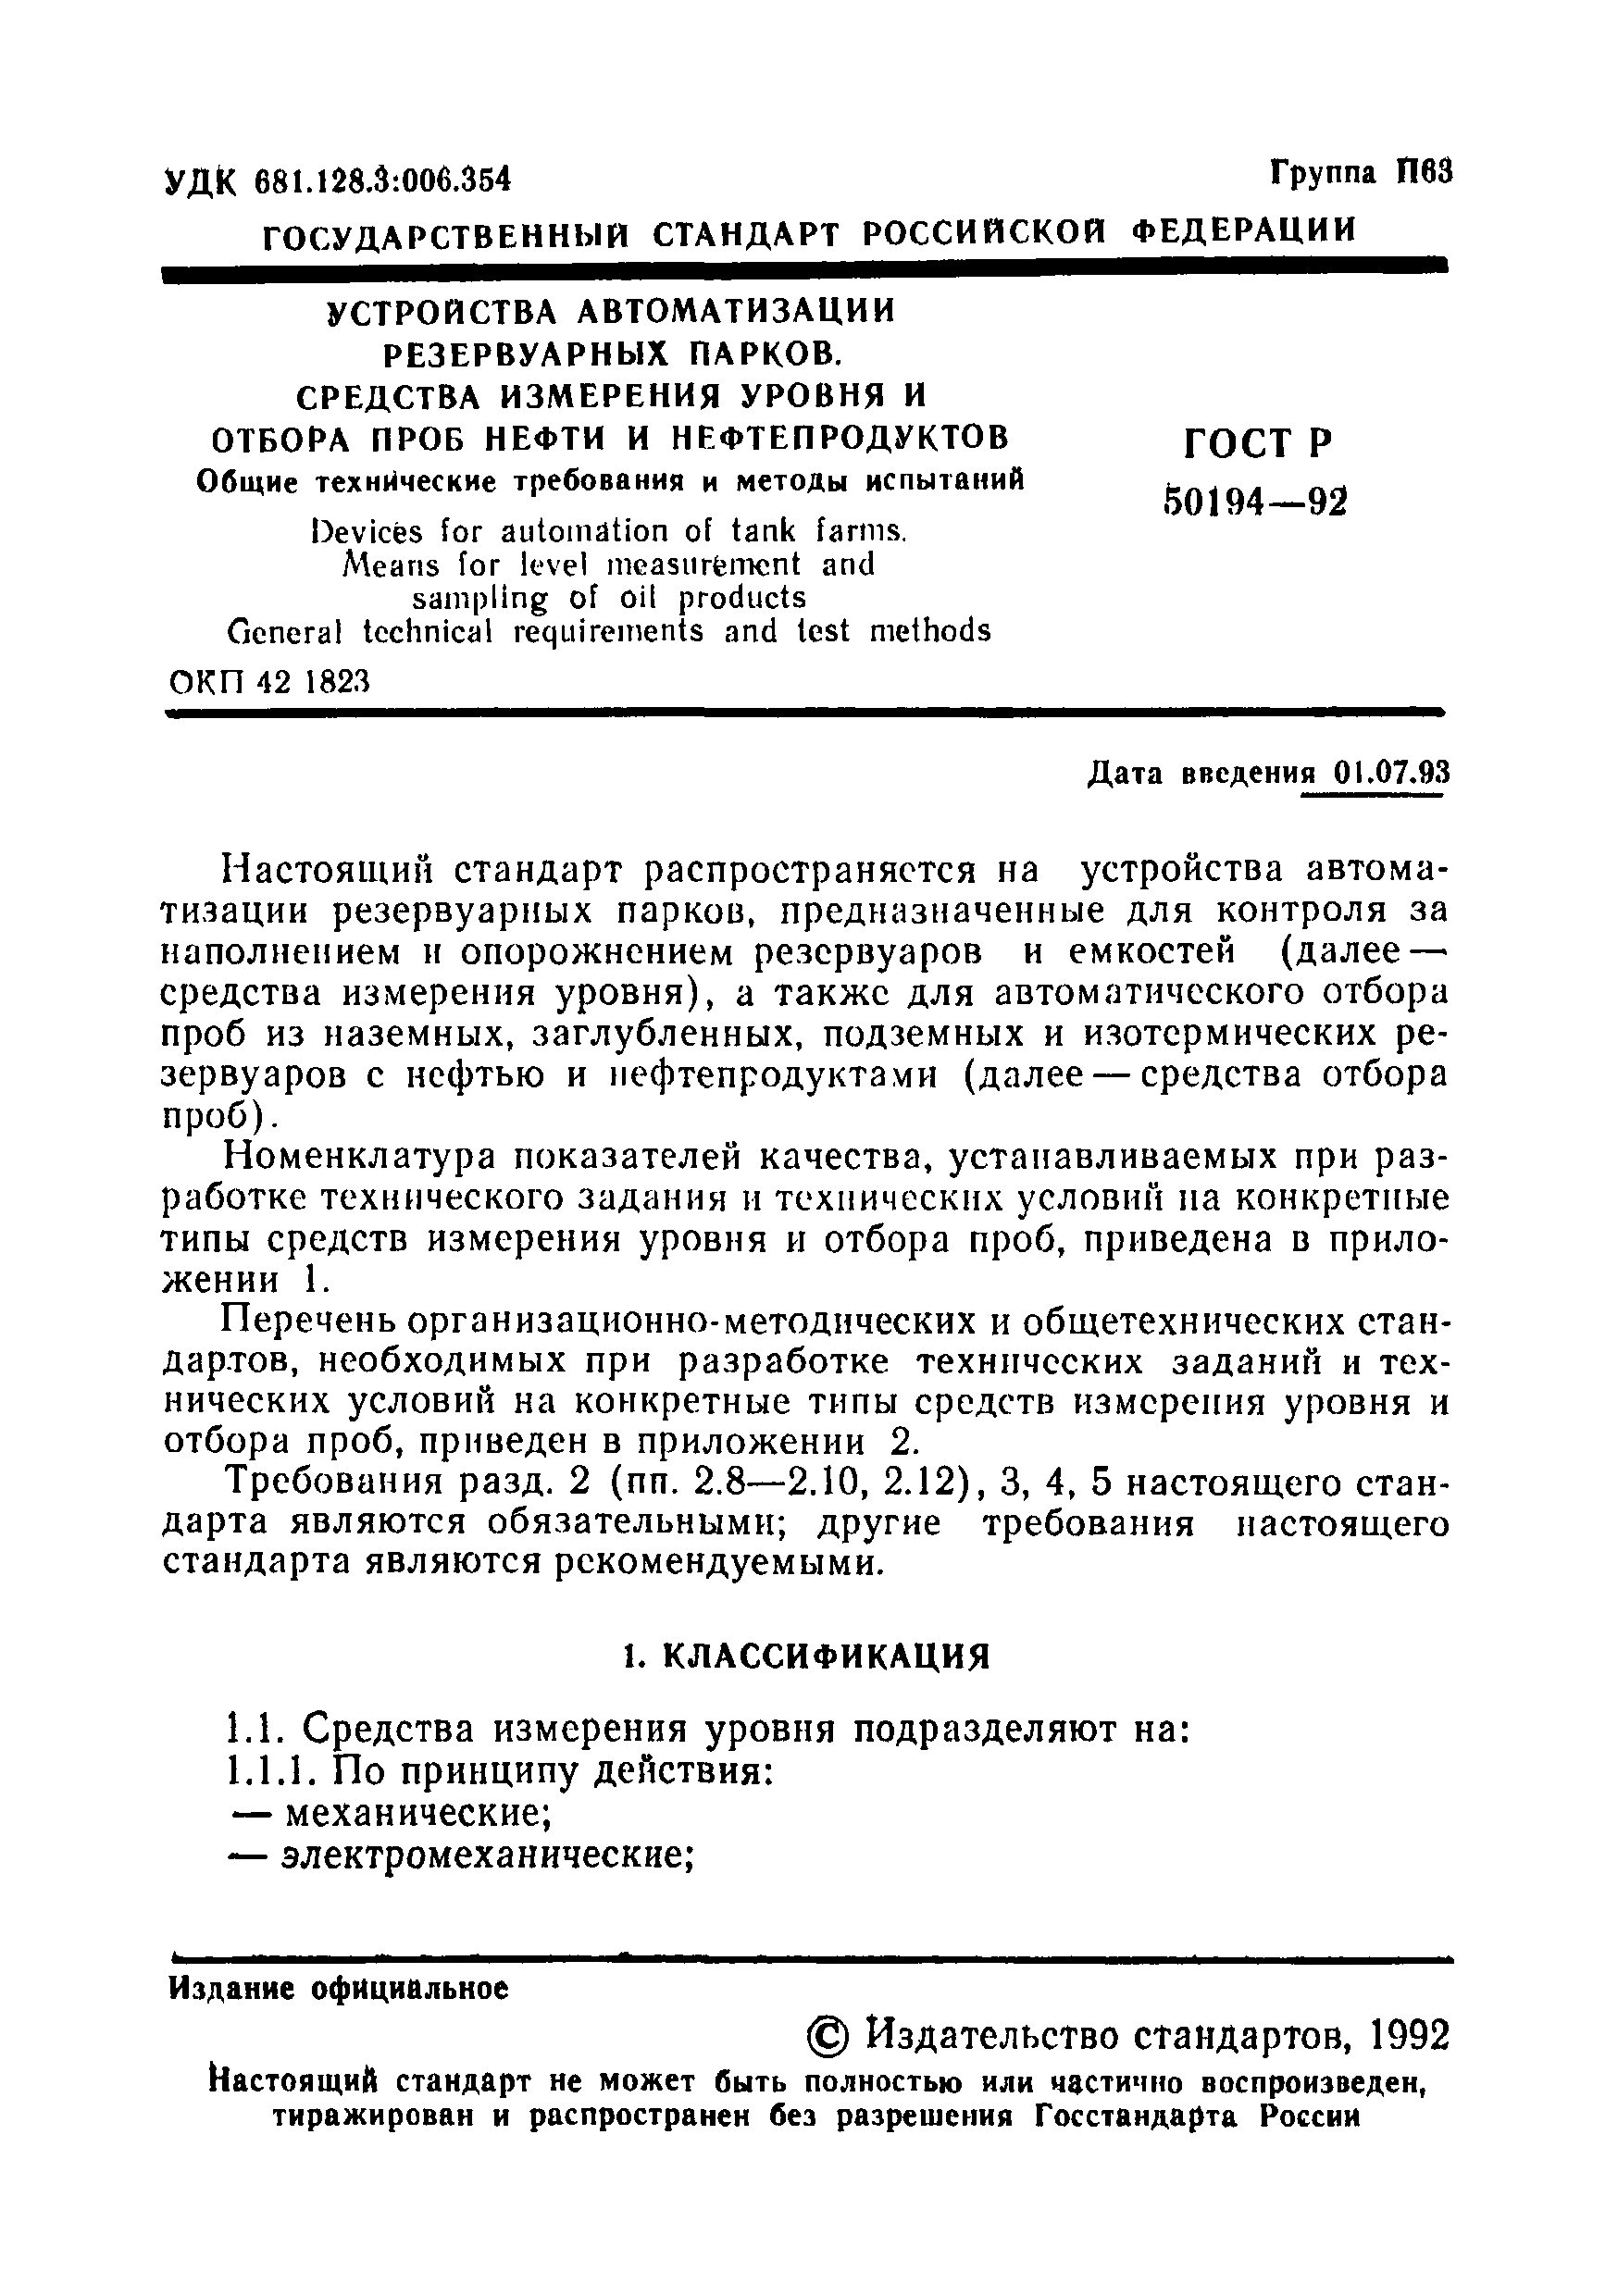 ГОСТ Р 50194-92